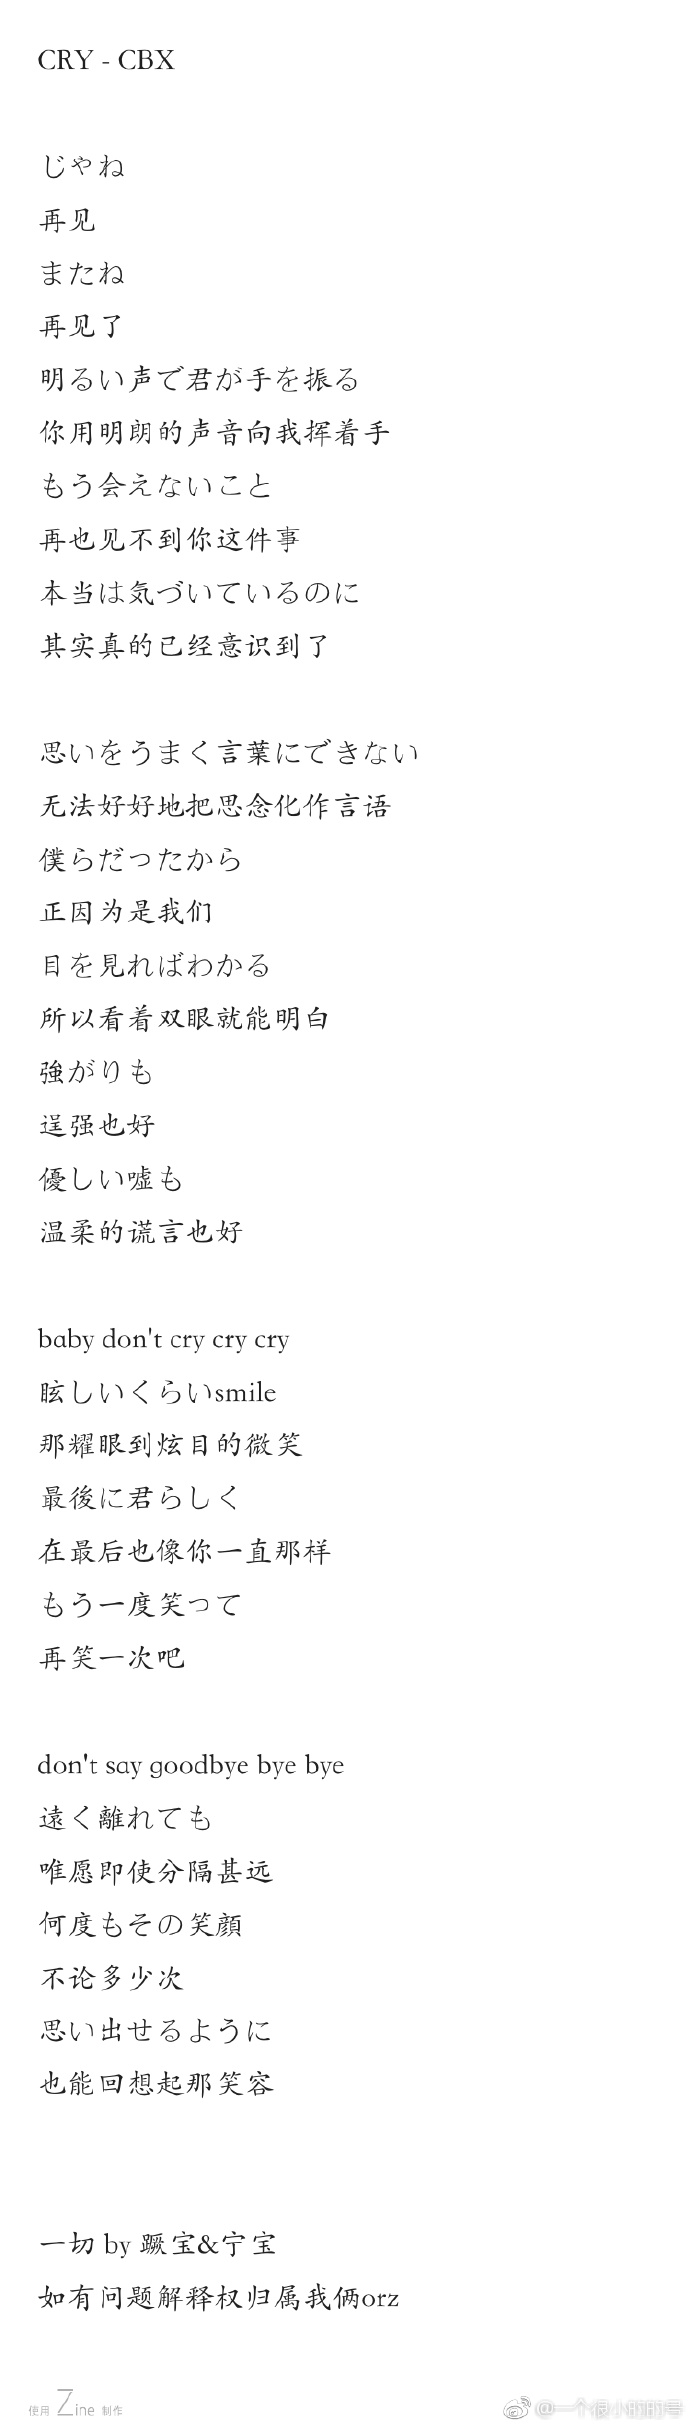 Exo 分享 经典日式悲伤之饭制cbx Cry 歌词中文版公开 Idol新闻